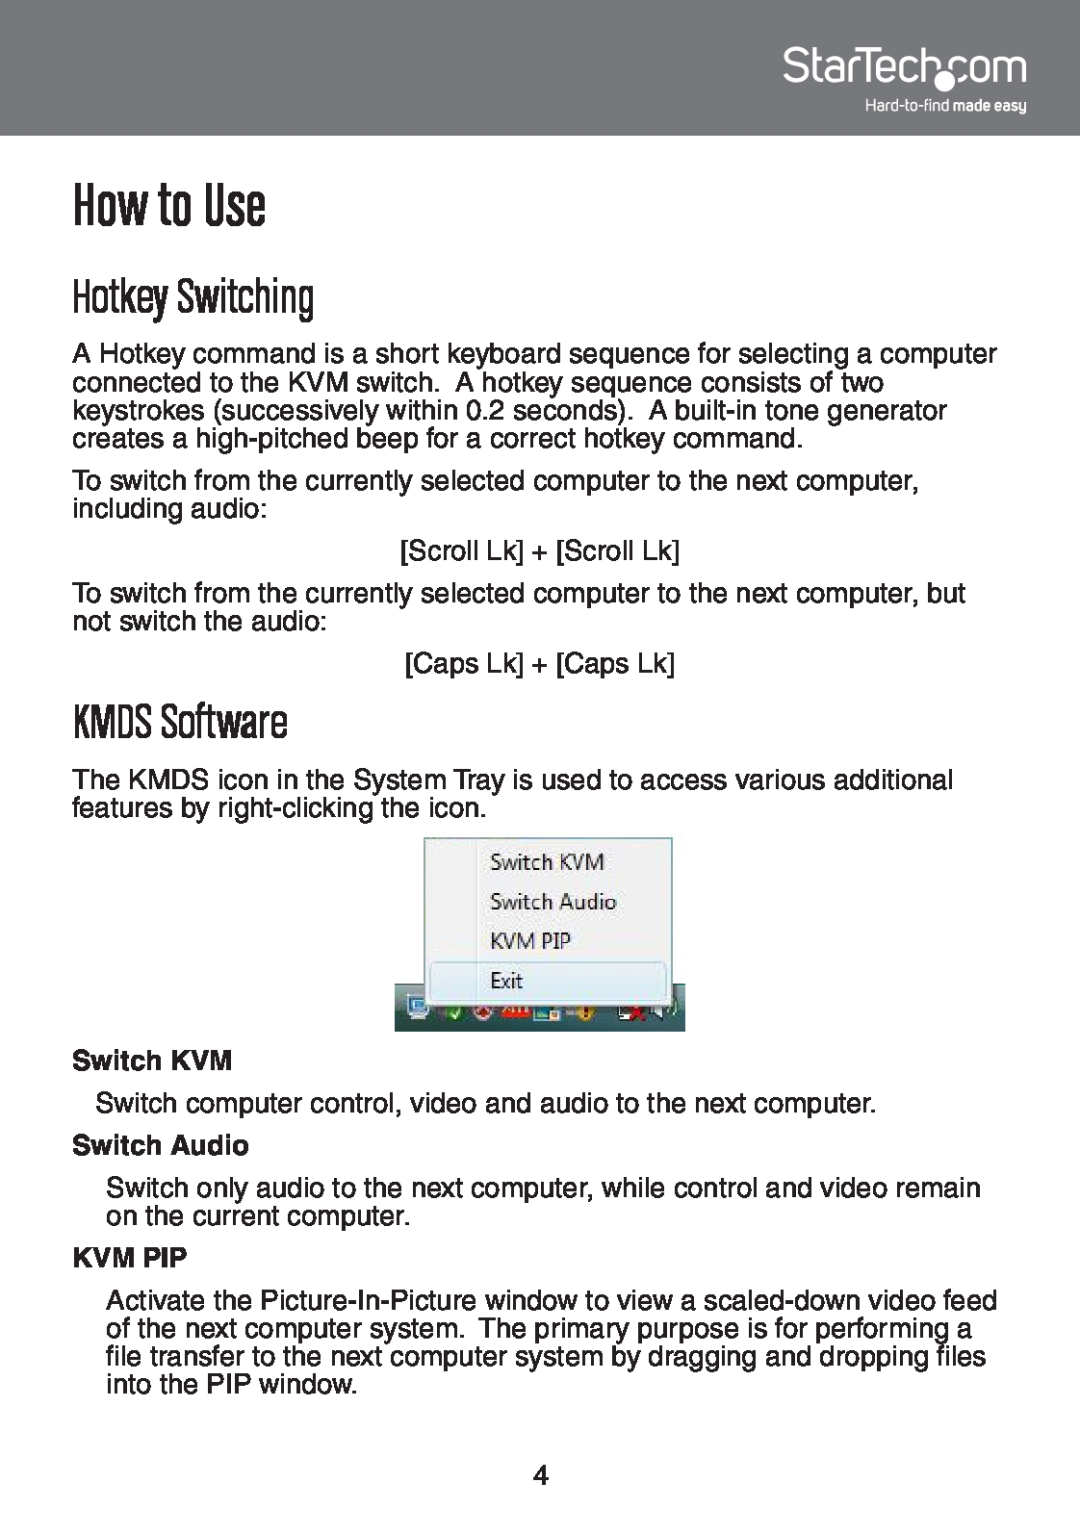 StarTech.com SV231UAF instruction manual How to Use, Hotkey Switching, KMDS Software, Switch KVM, Switch Audio, Kvm Pip 